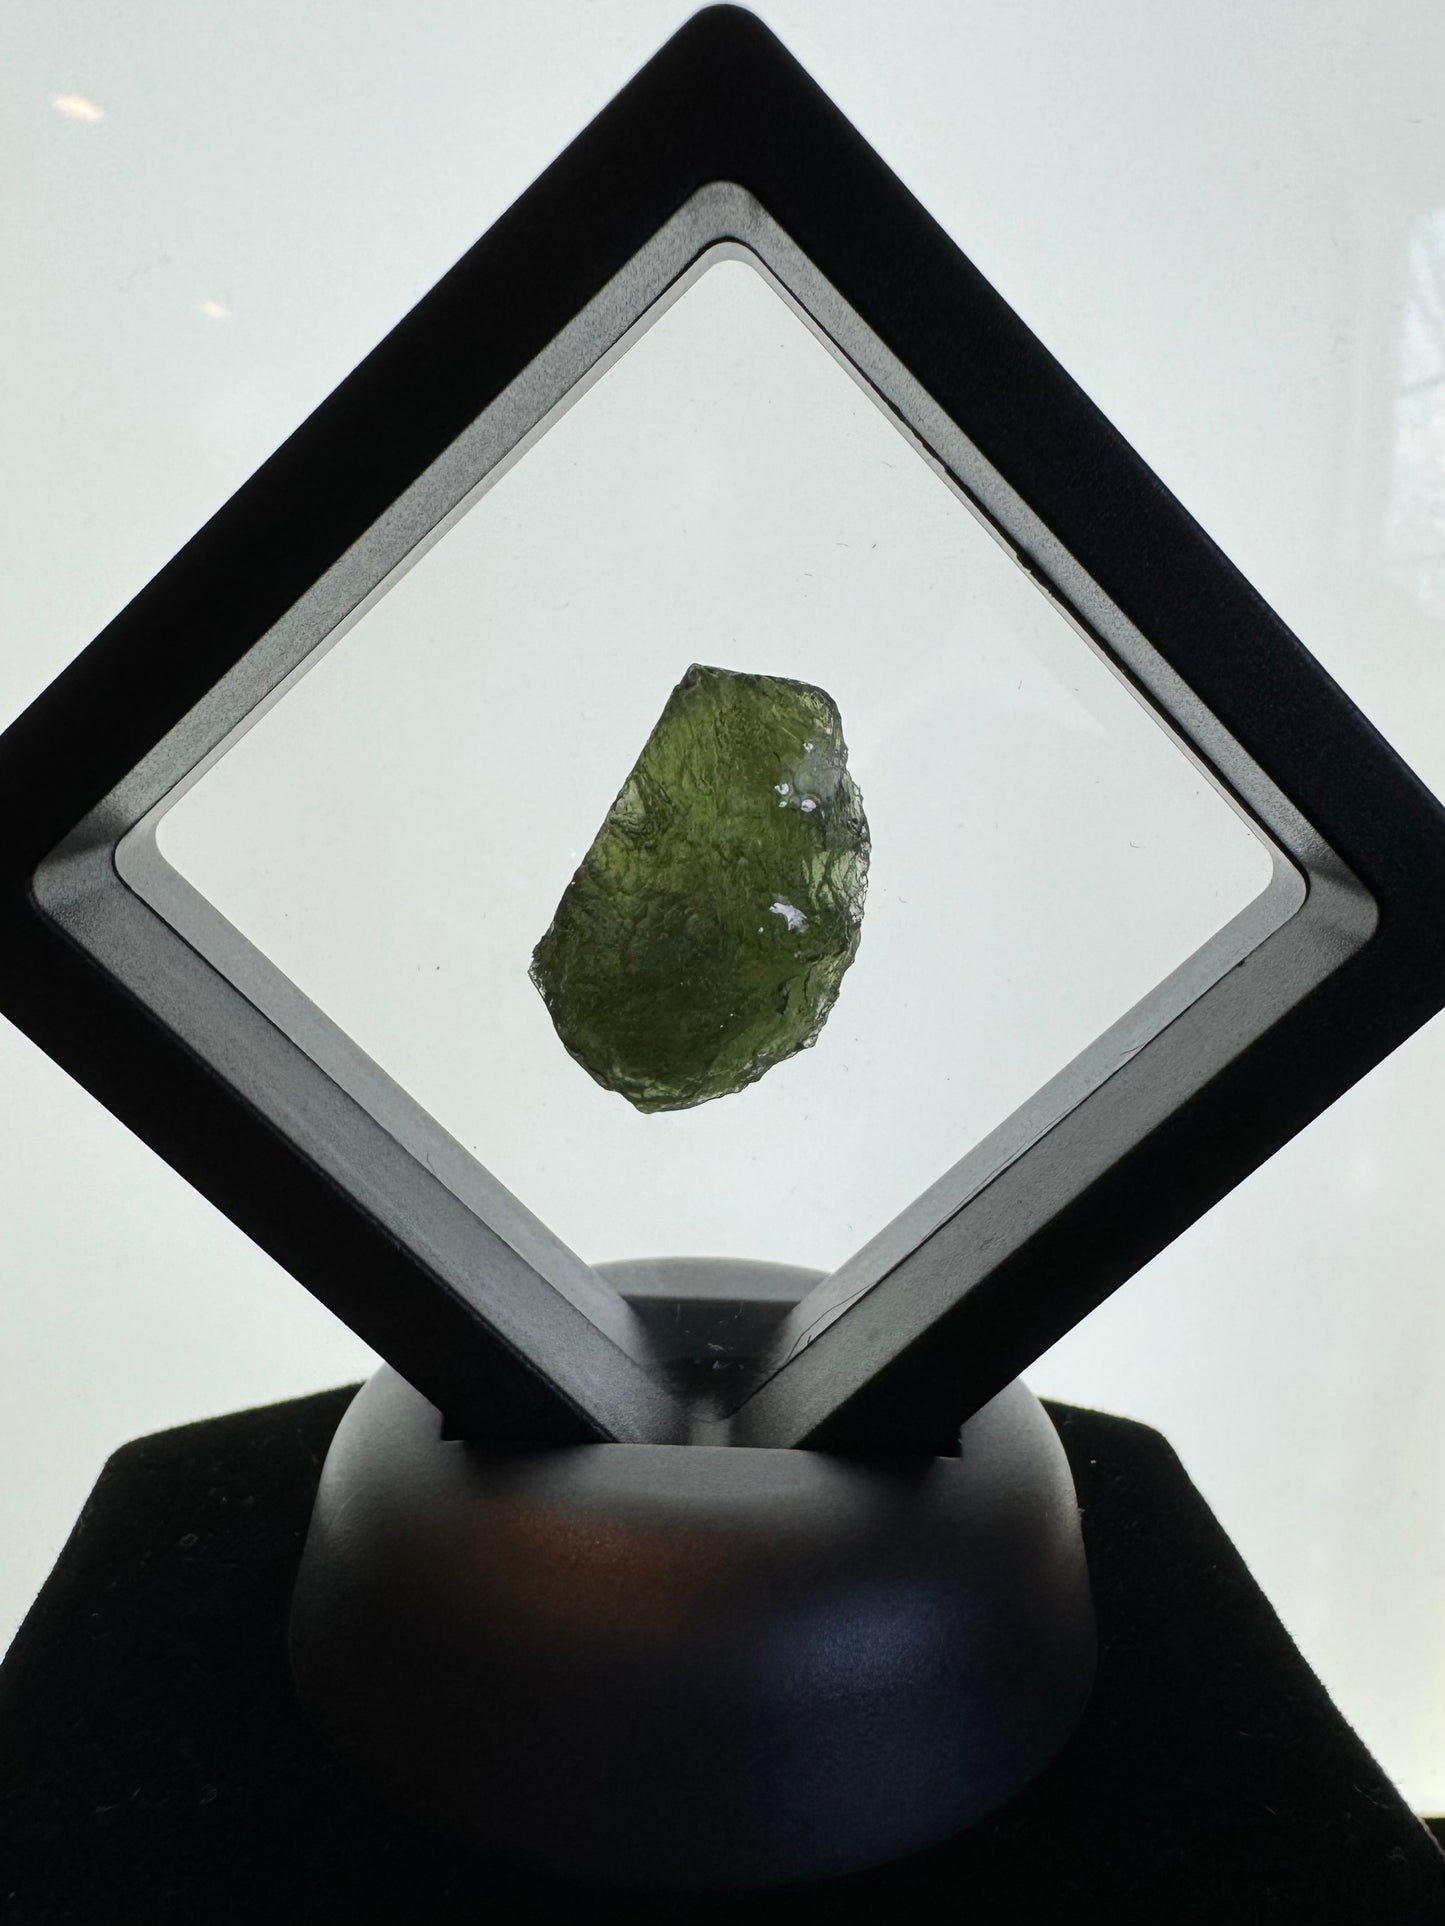 Moldavite Crystal